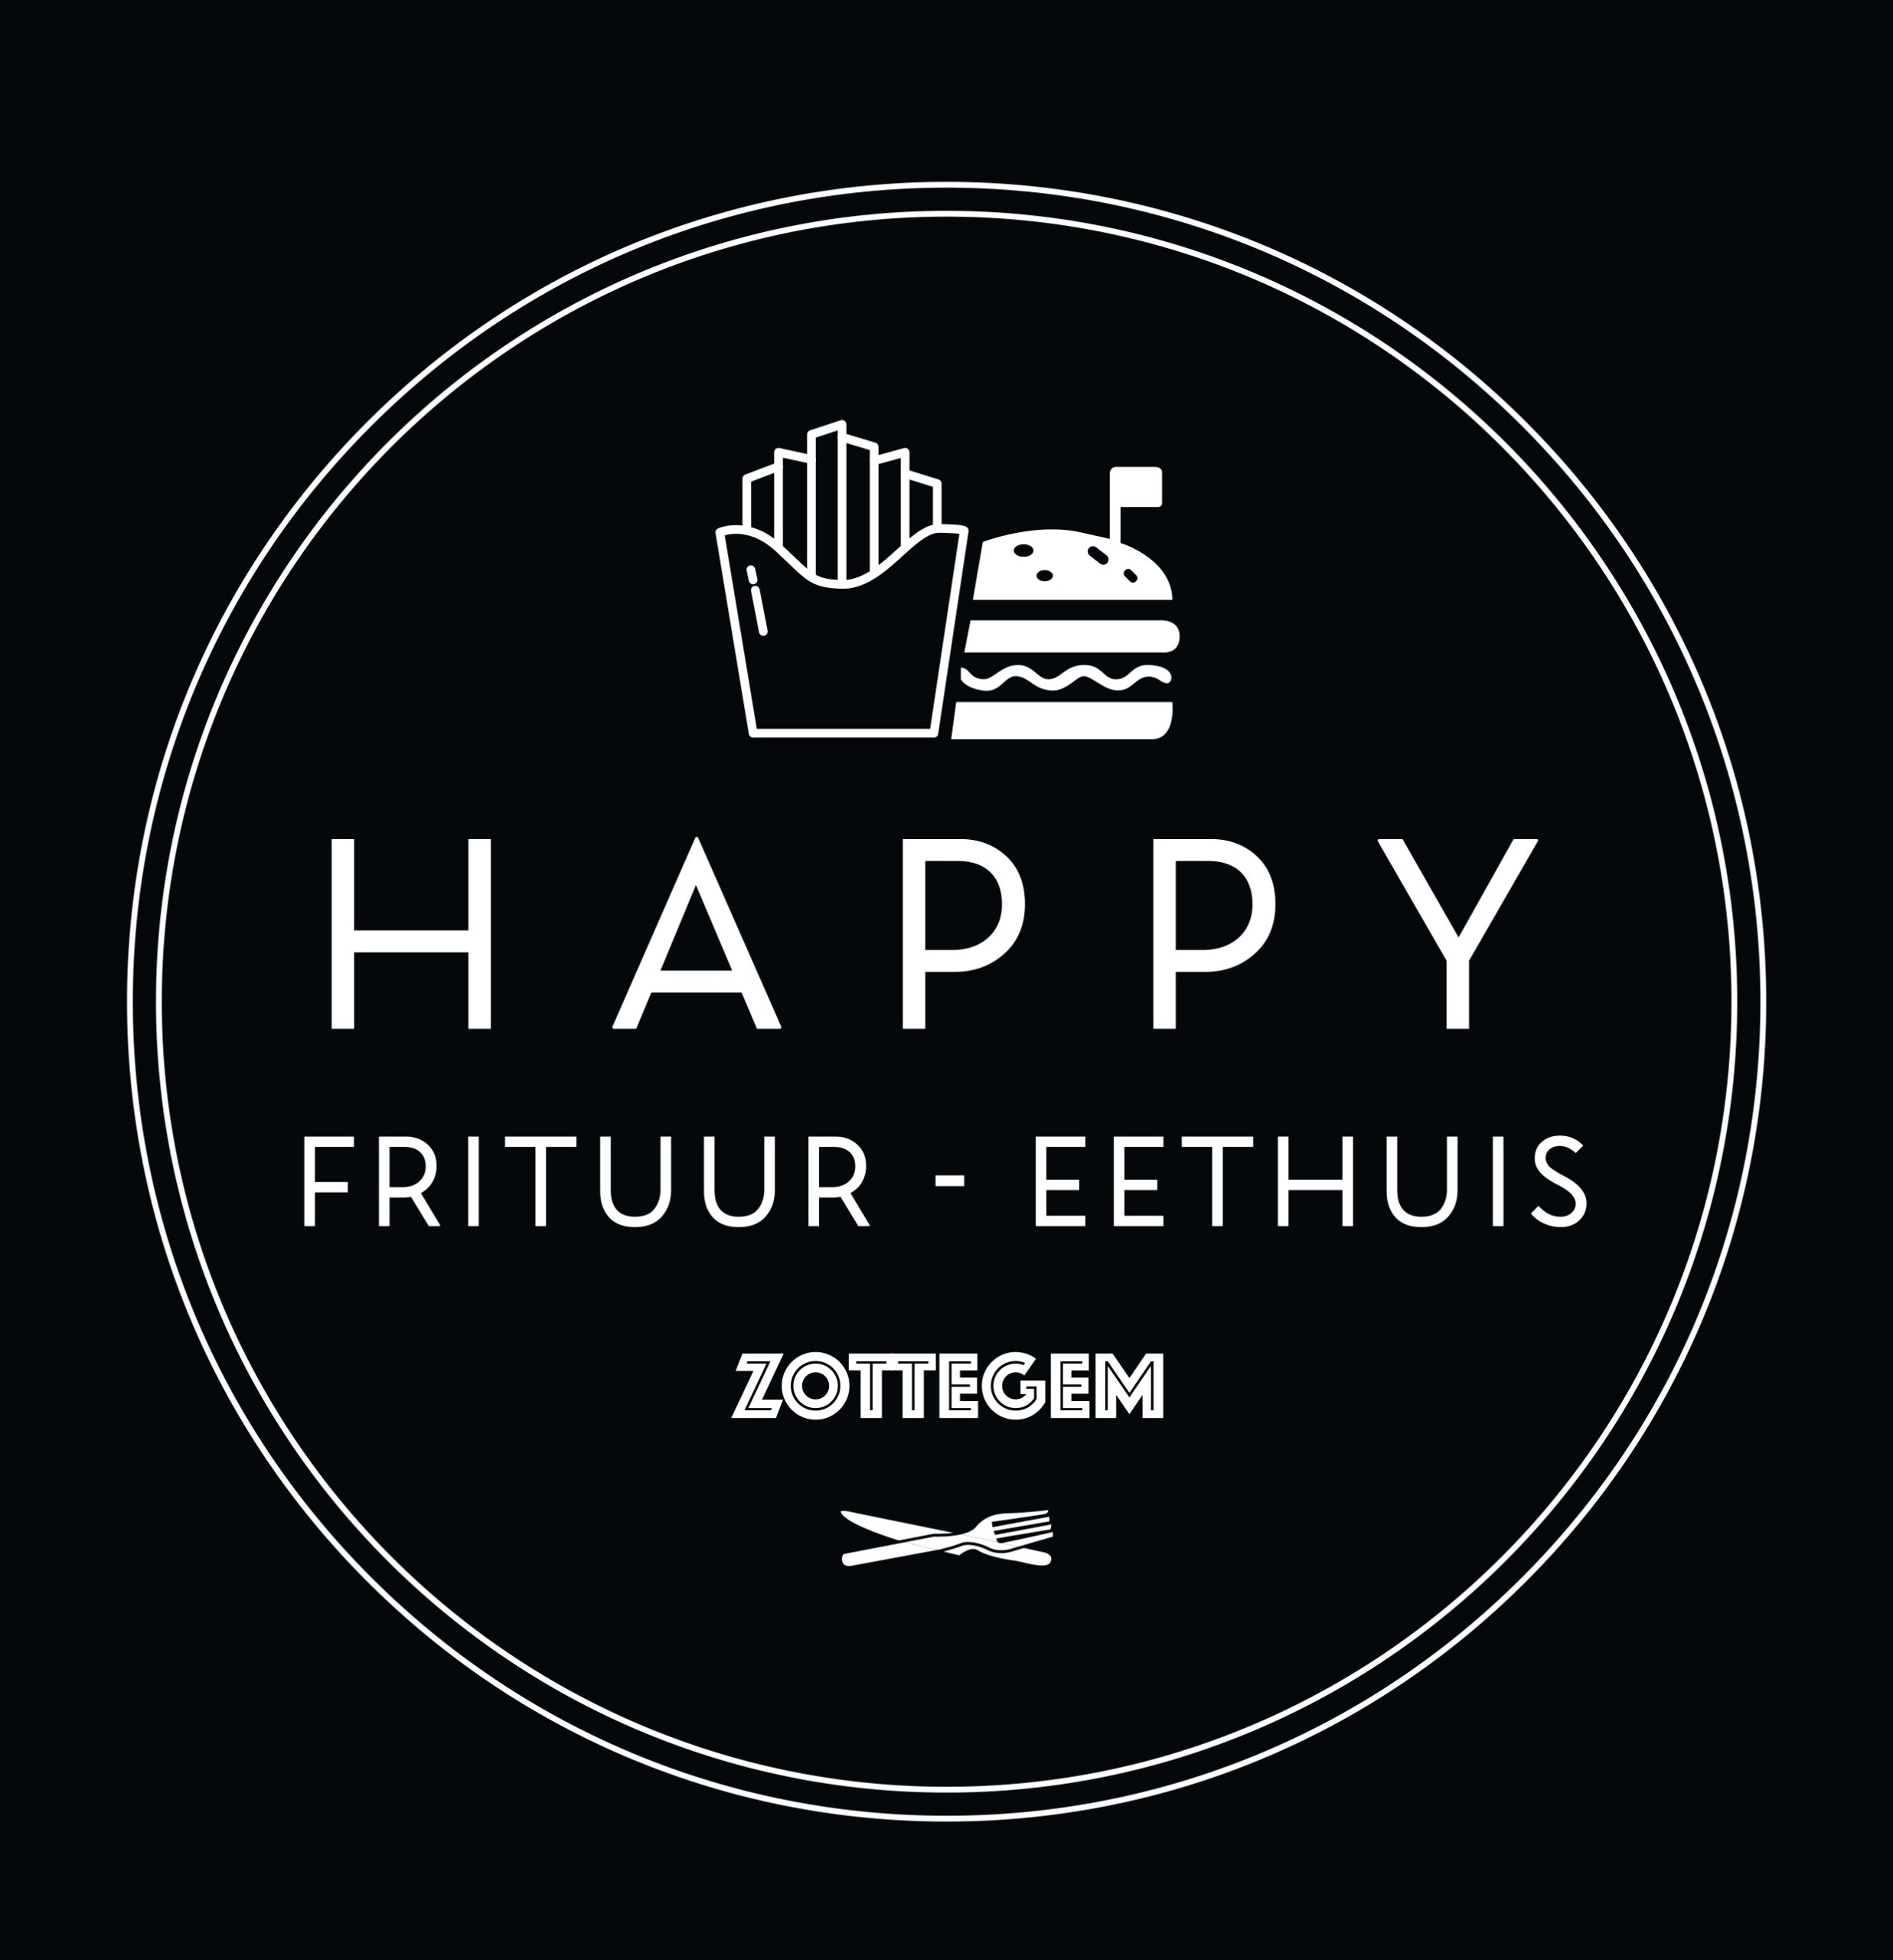 Happy frituur - Eethuis Zottegem